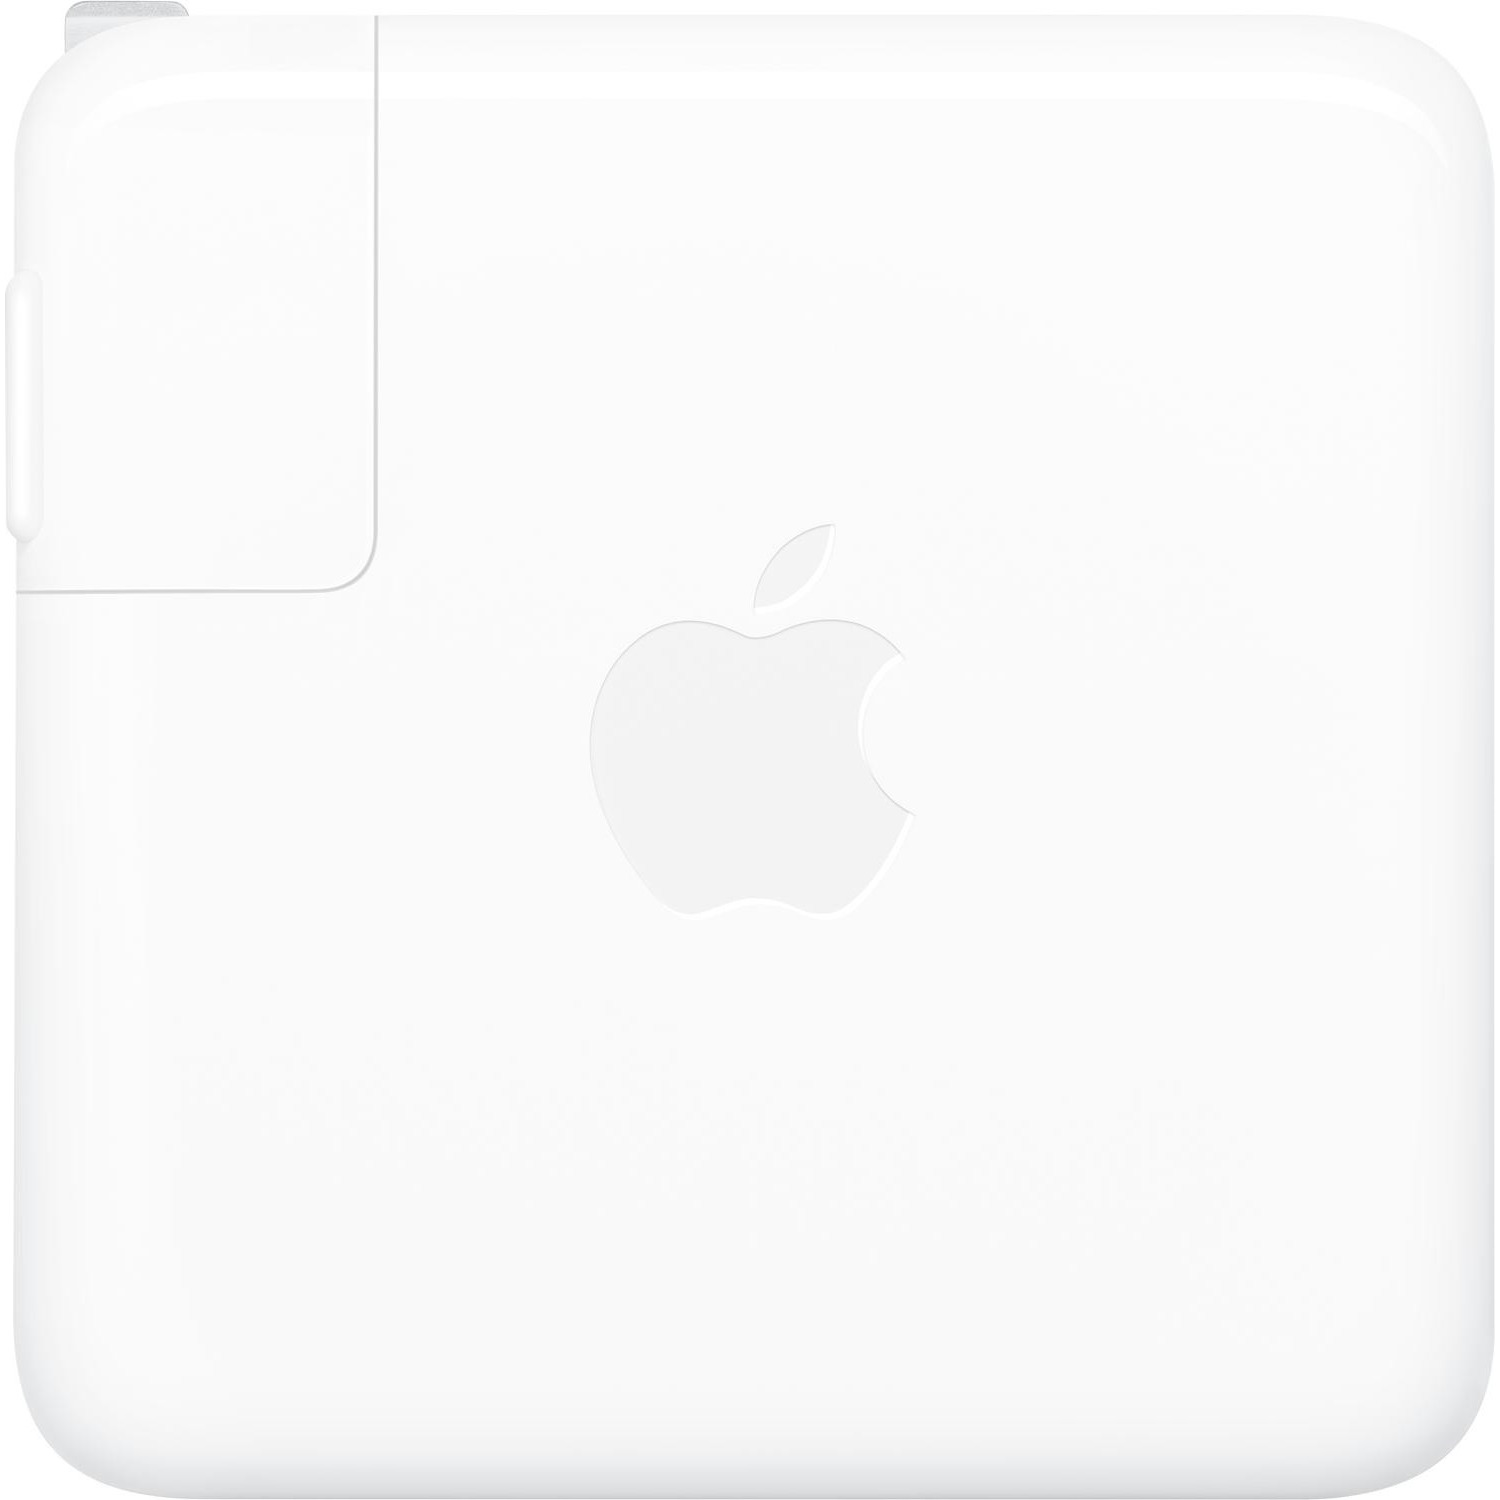 Immagine per Alimentatore Apple USB-C da 67W da DIMOStore